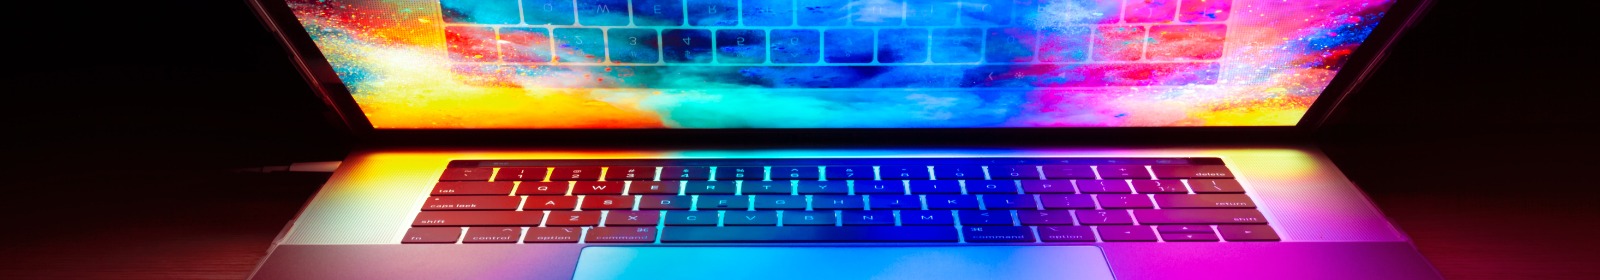 laptop with rainbow desktop background